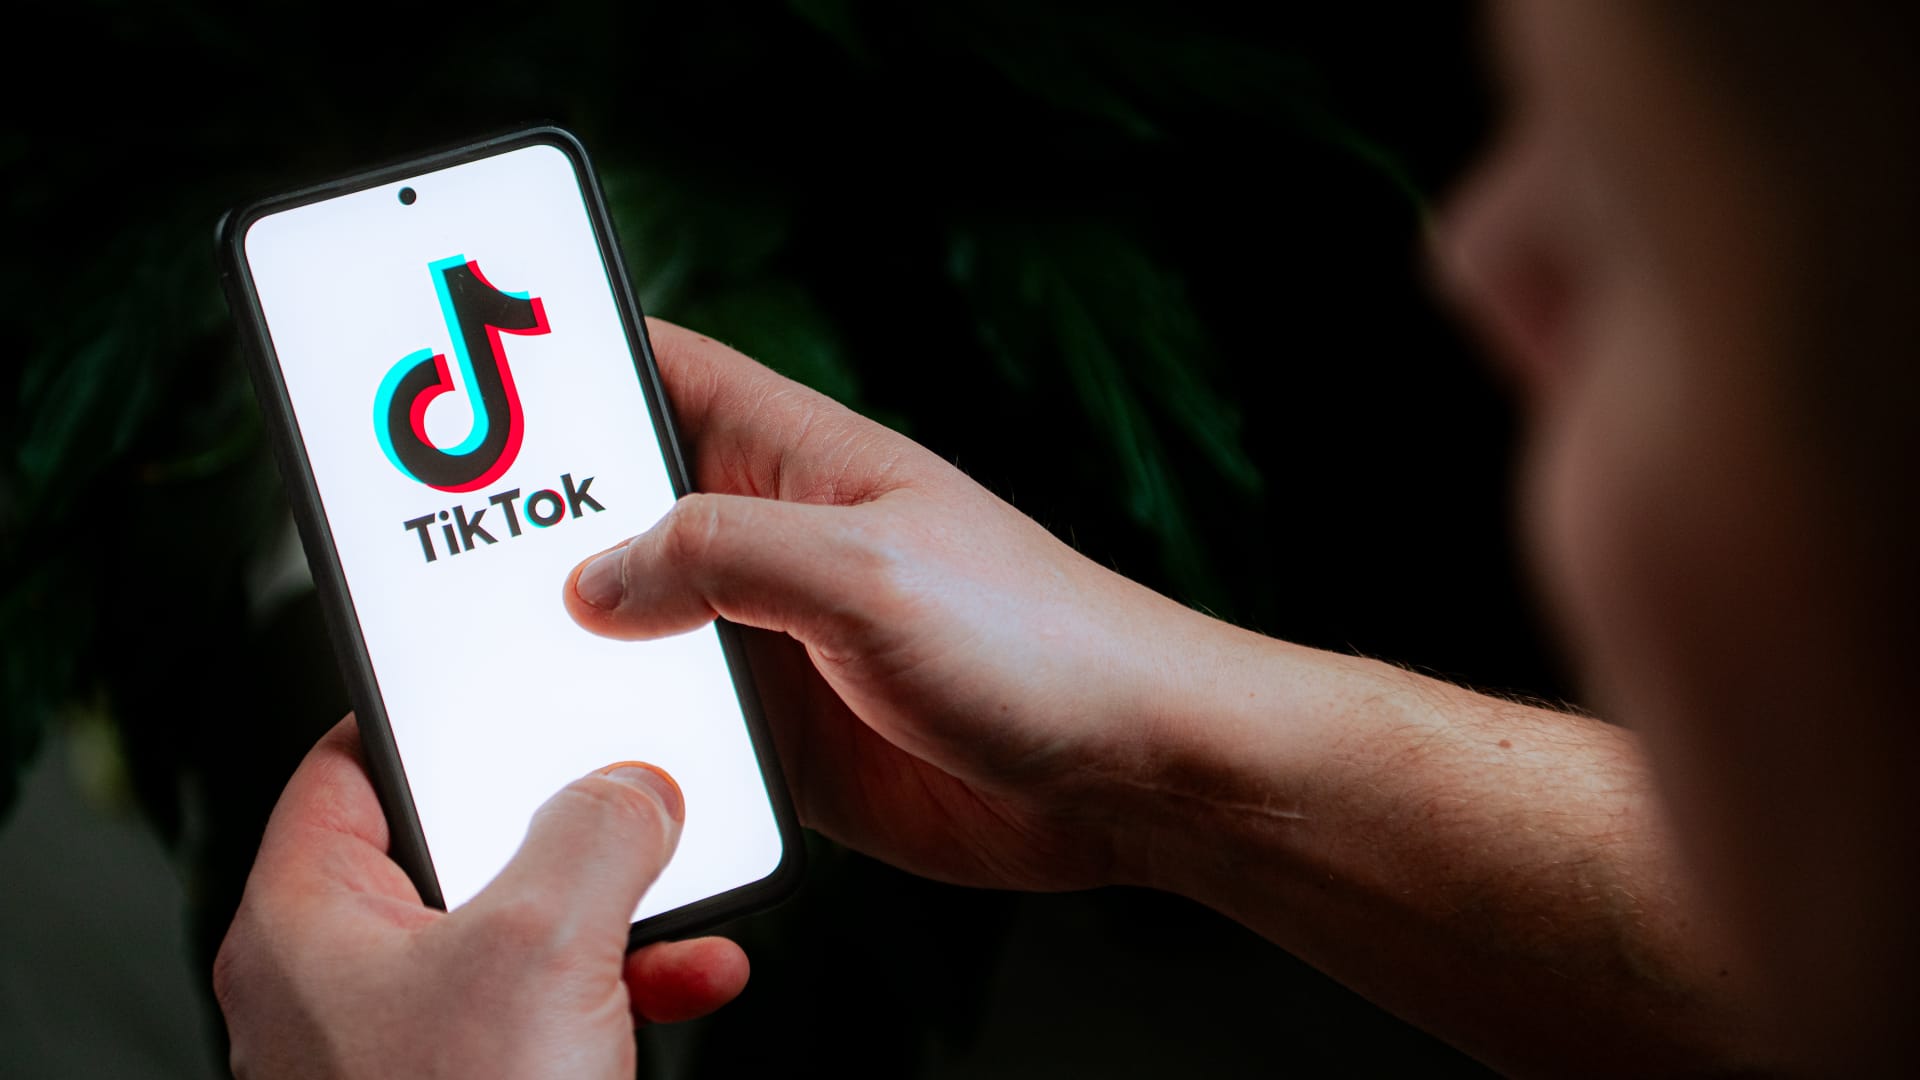 TikTok faces more heat in Washington as House members introduce legislation demanding ByteDance divestiture